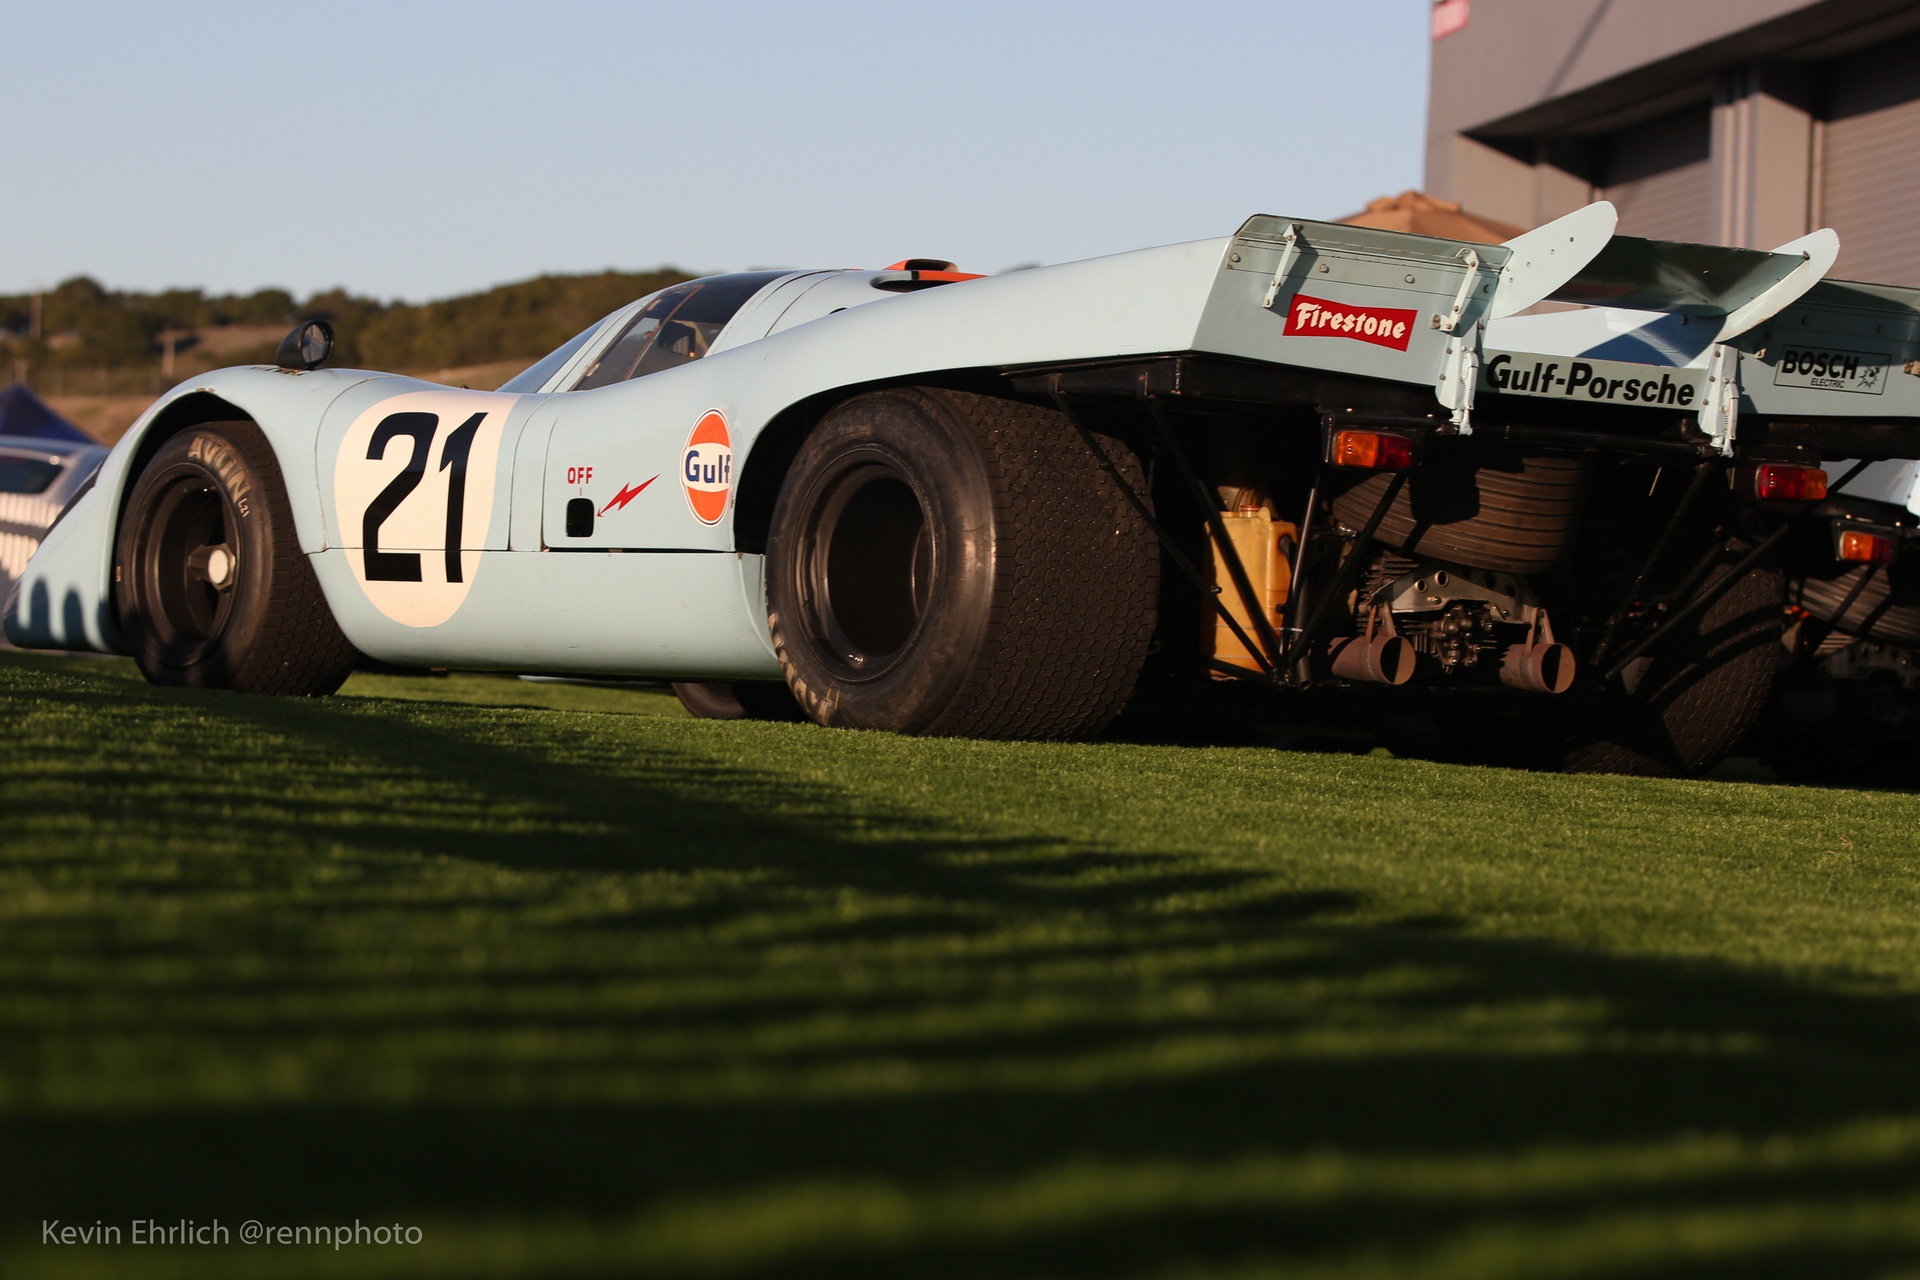 Porsche 917 in Gulf livery on grass at Velocity Invitational